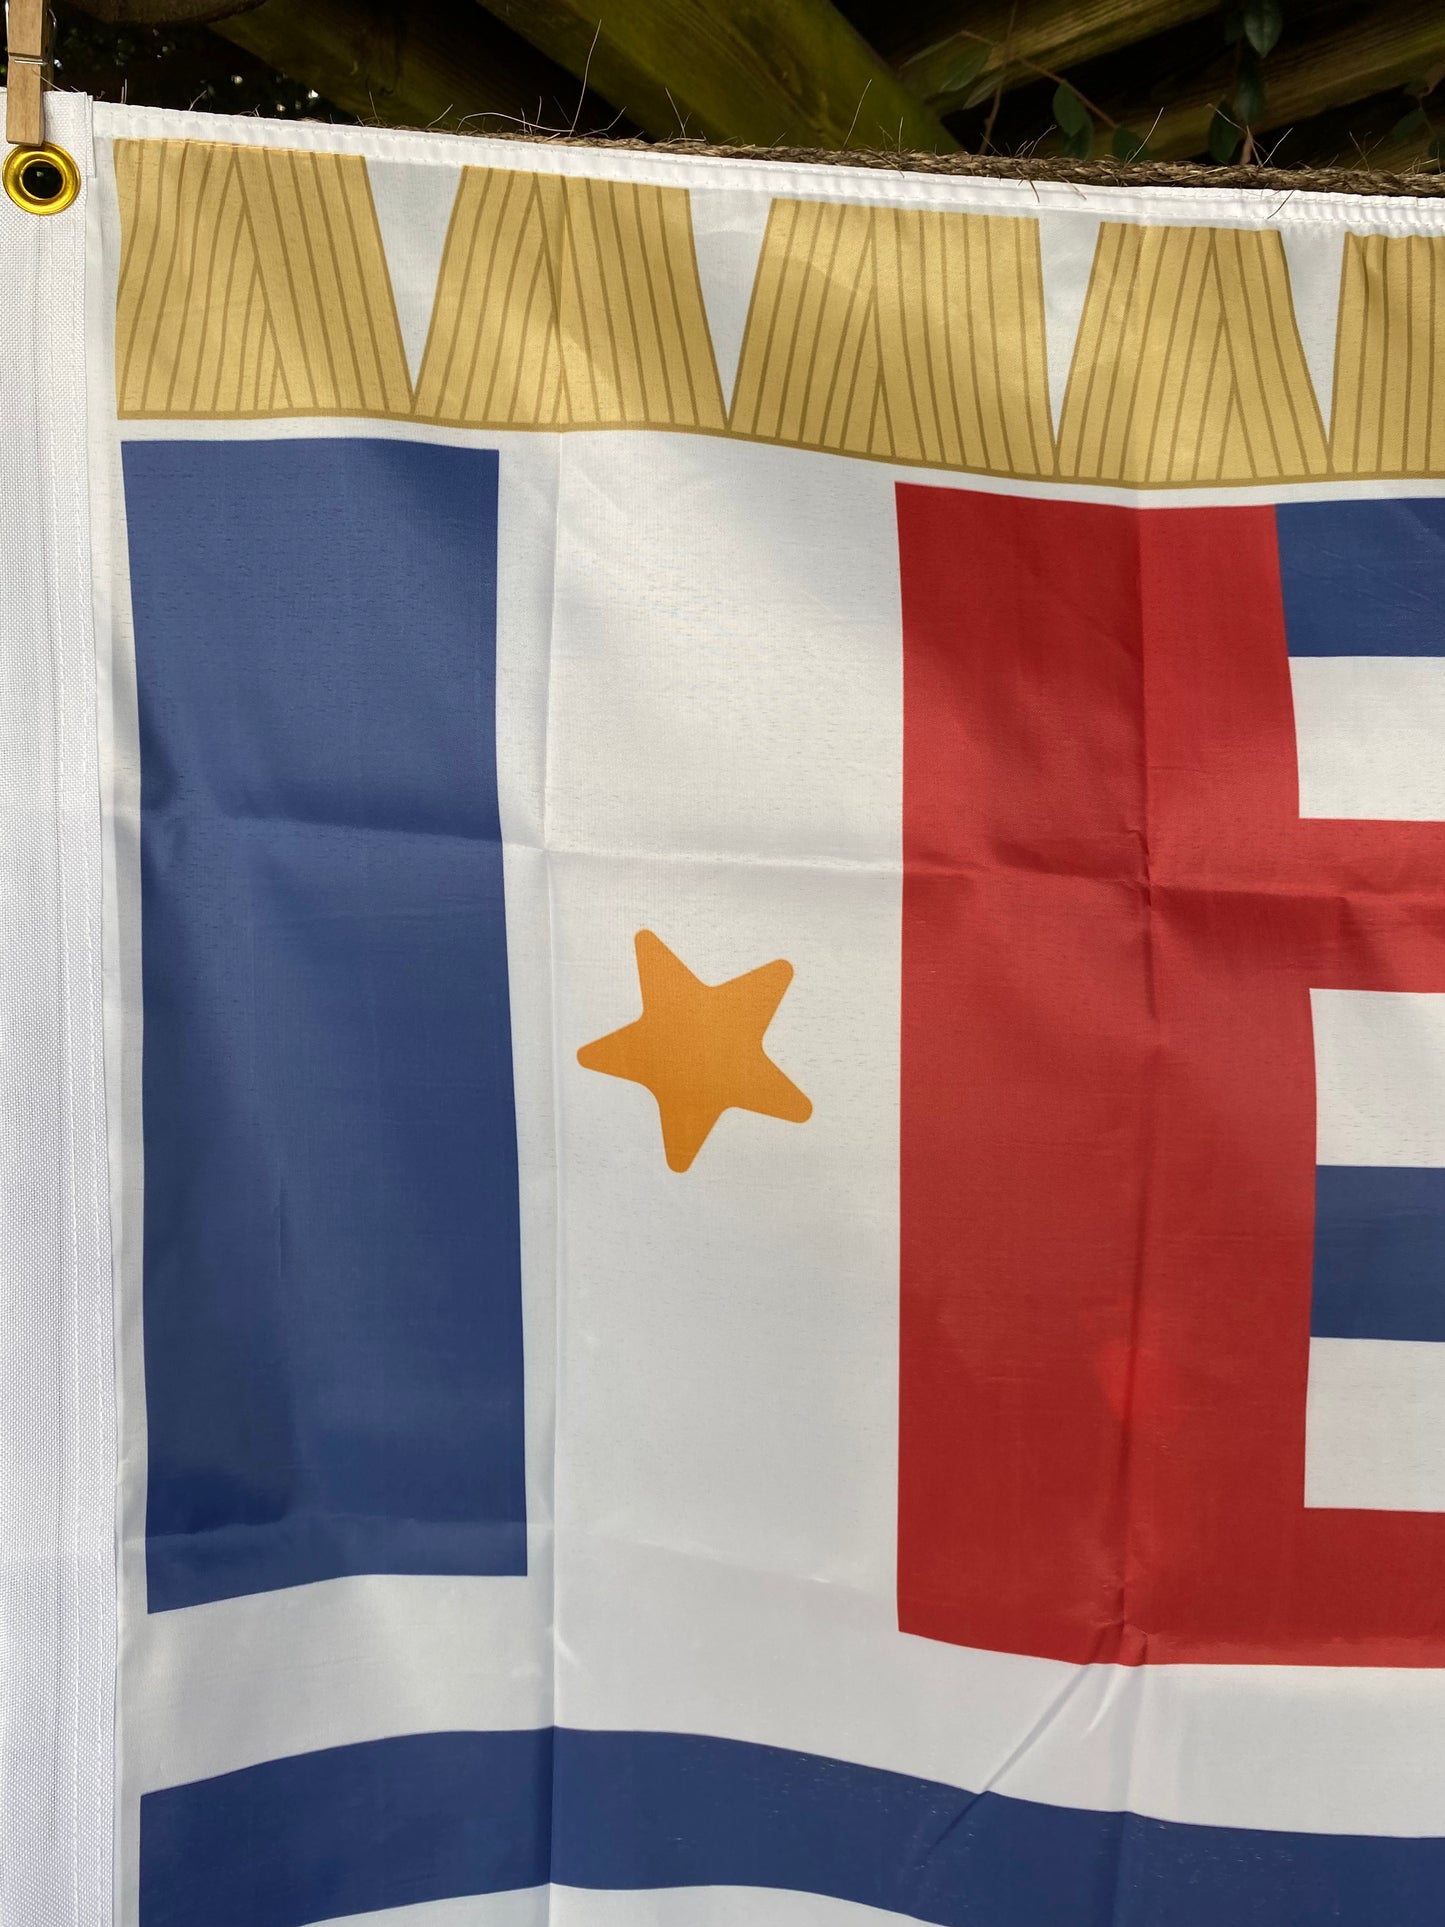 "French Legion" Variant of the Republic of Louisiana House Flag